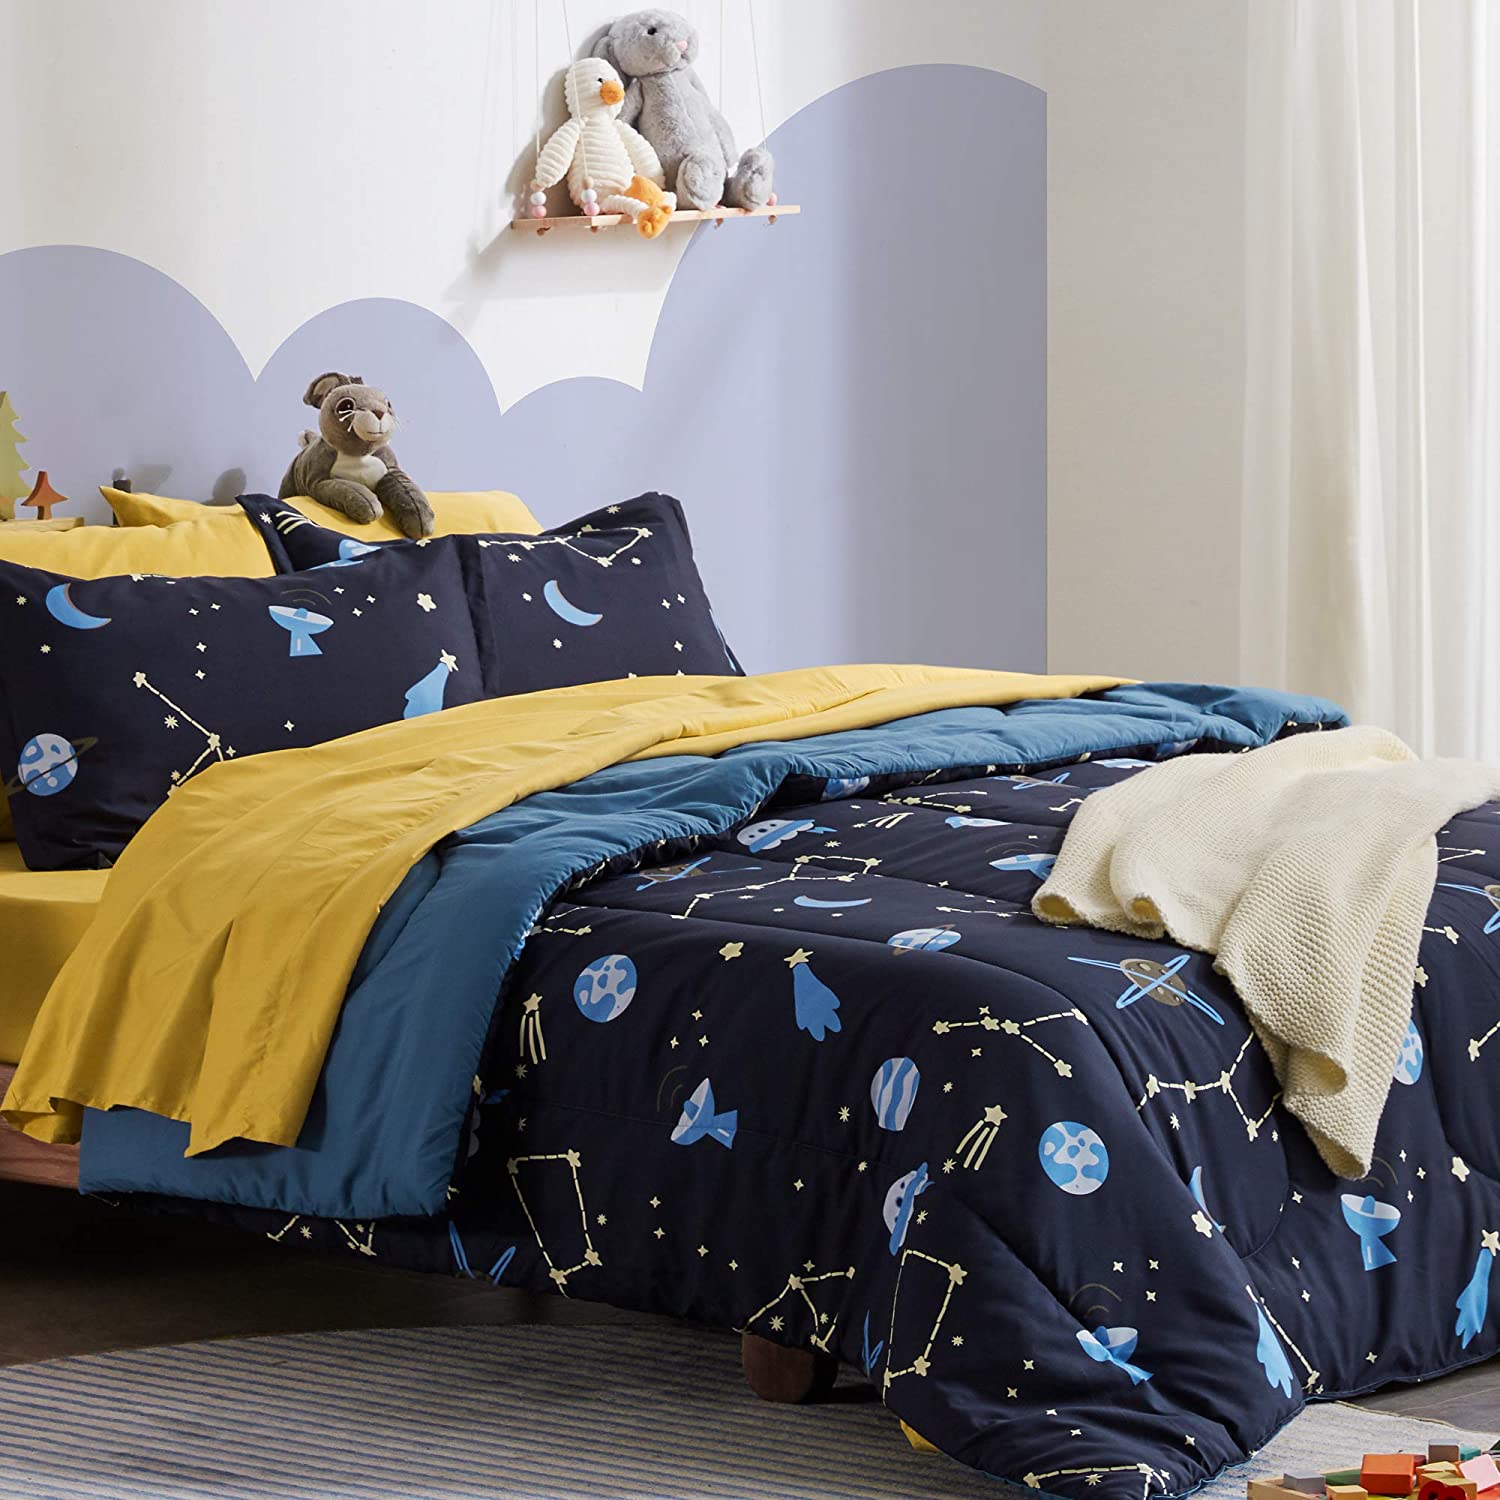 SLEEP ZONE Kids Bedding Twin Comforter Set - Cute Printed for Boys